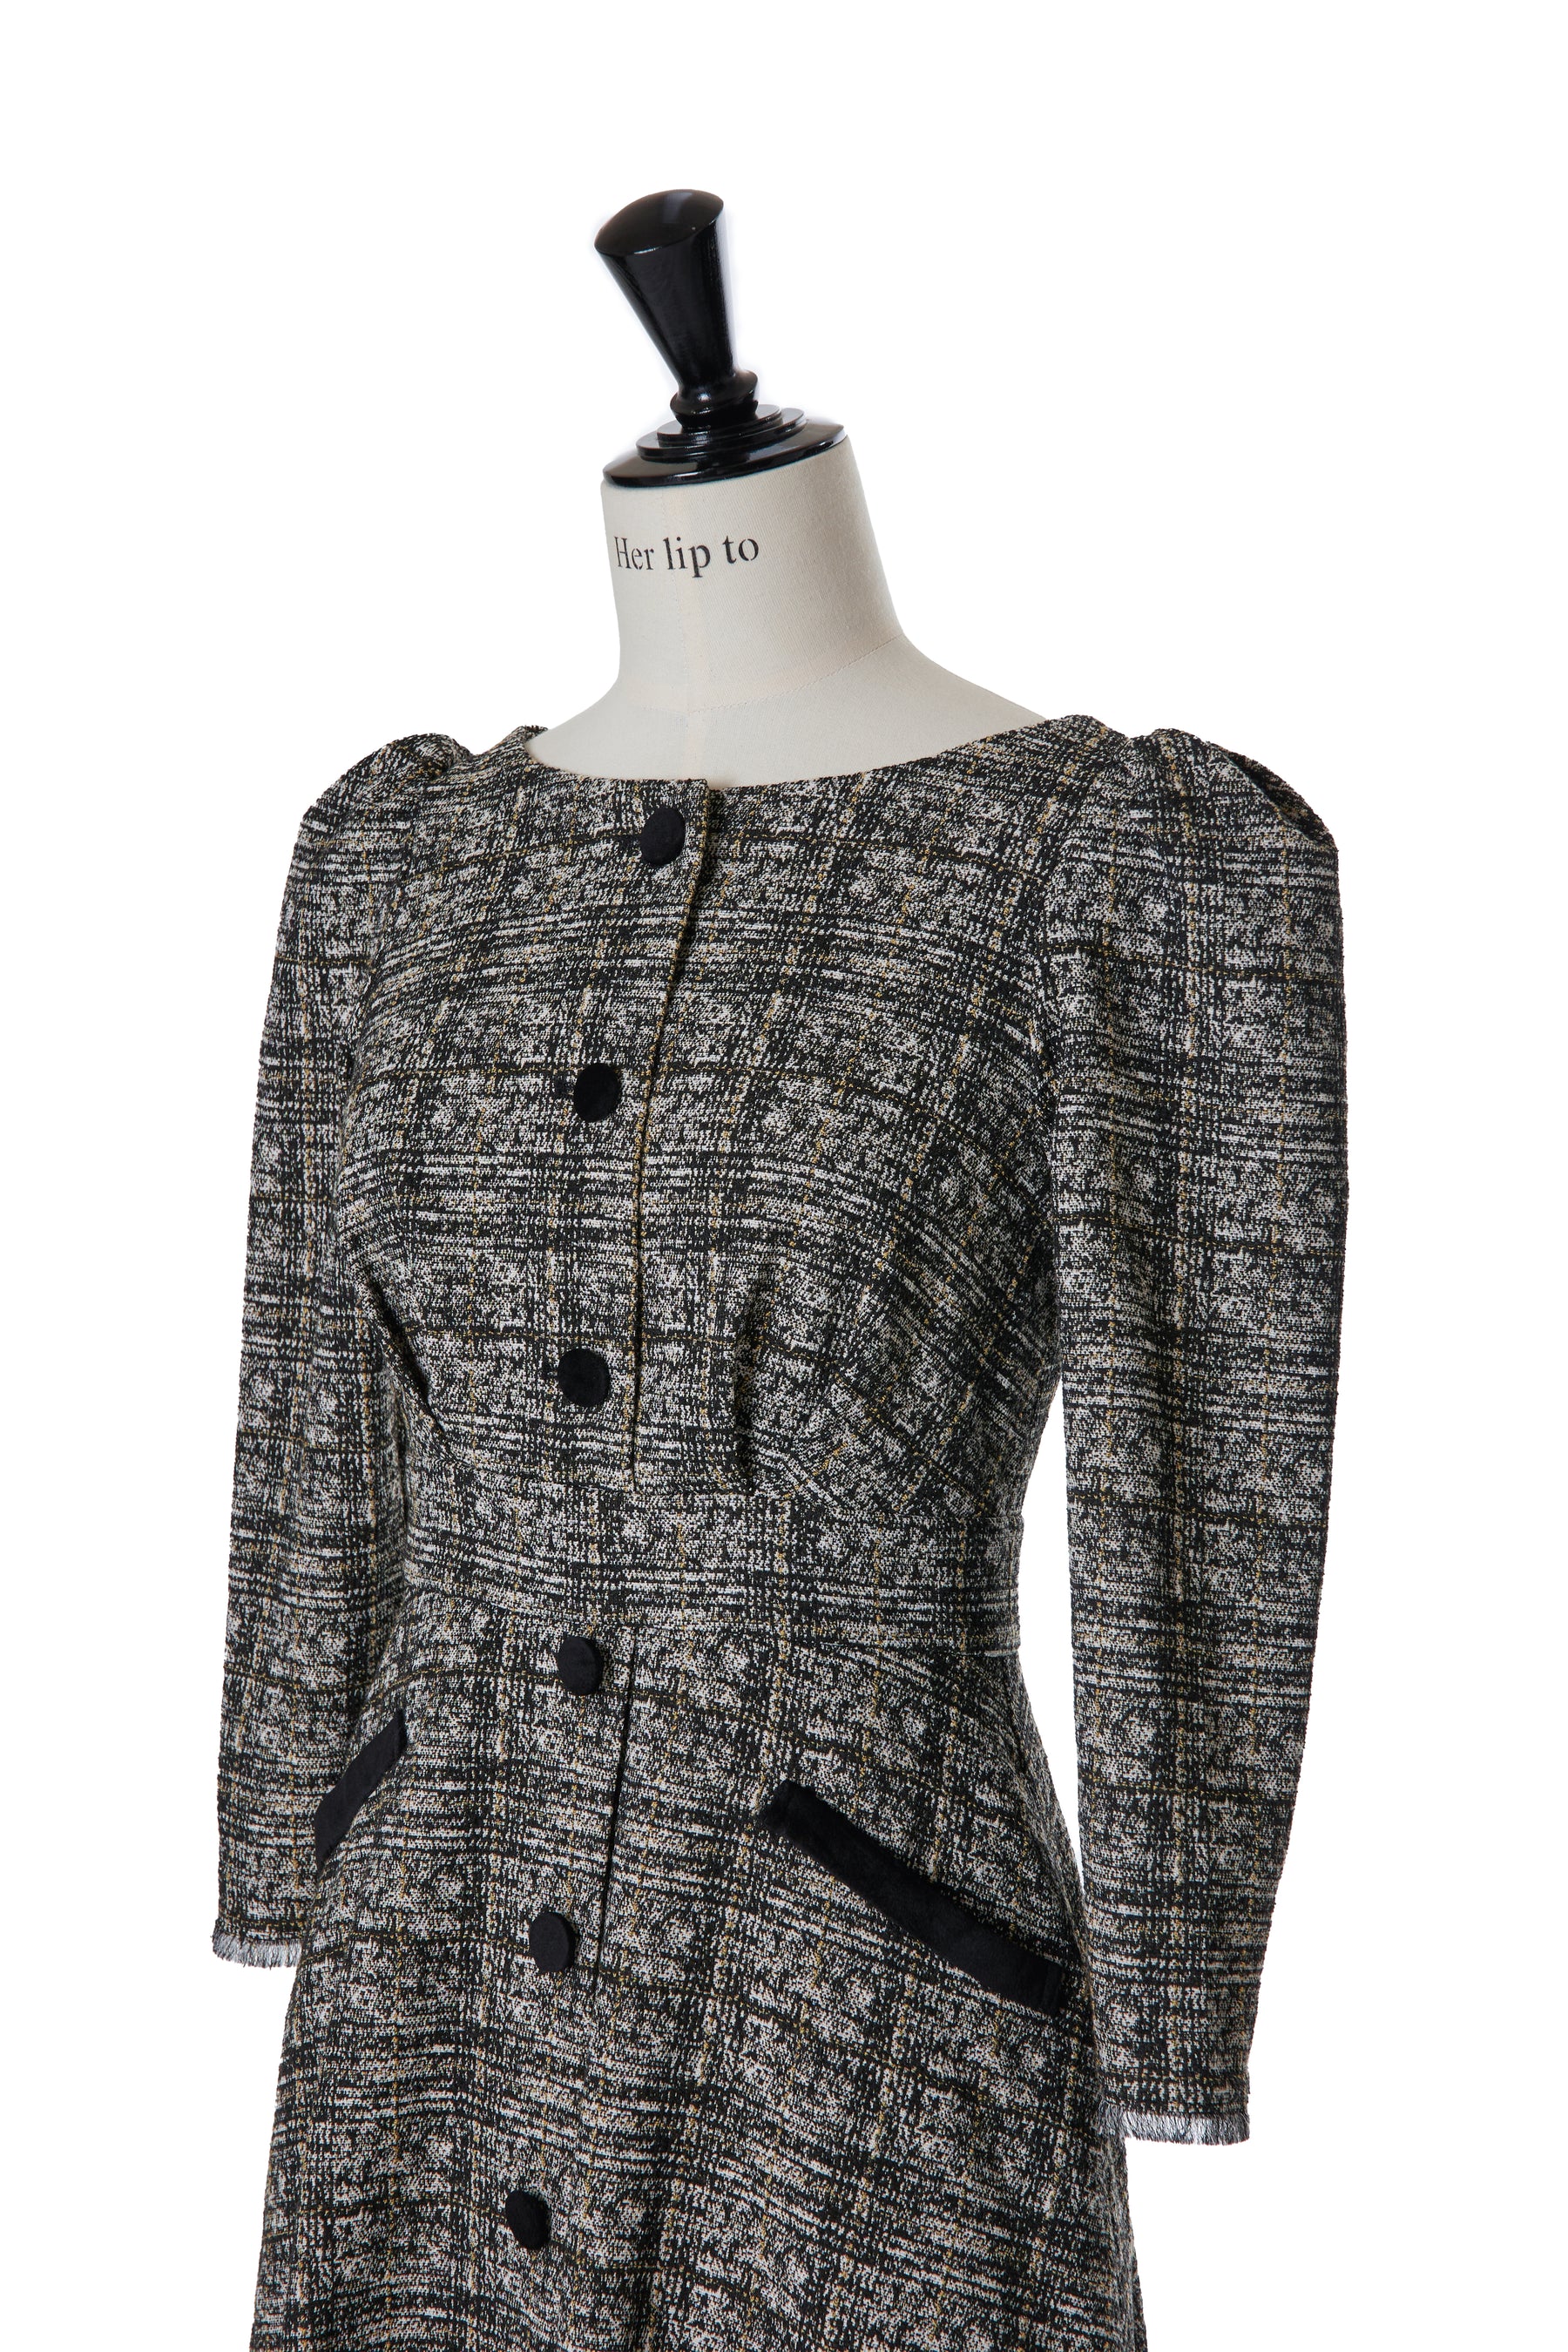 herlipto  Classic Tweed Midi Dress Mサイズ